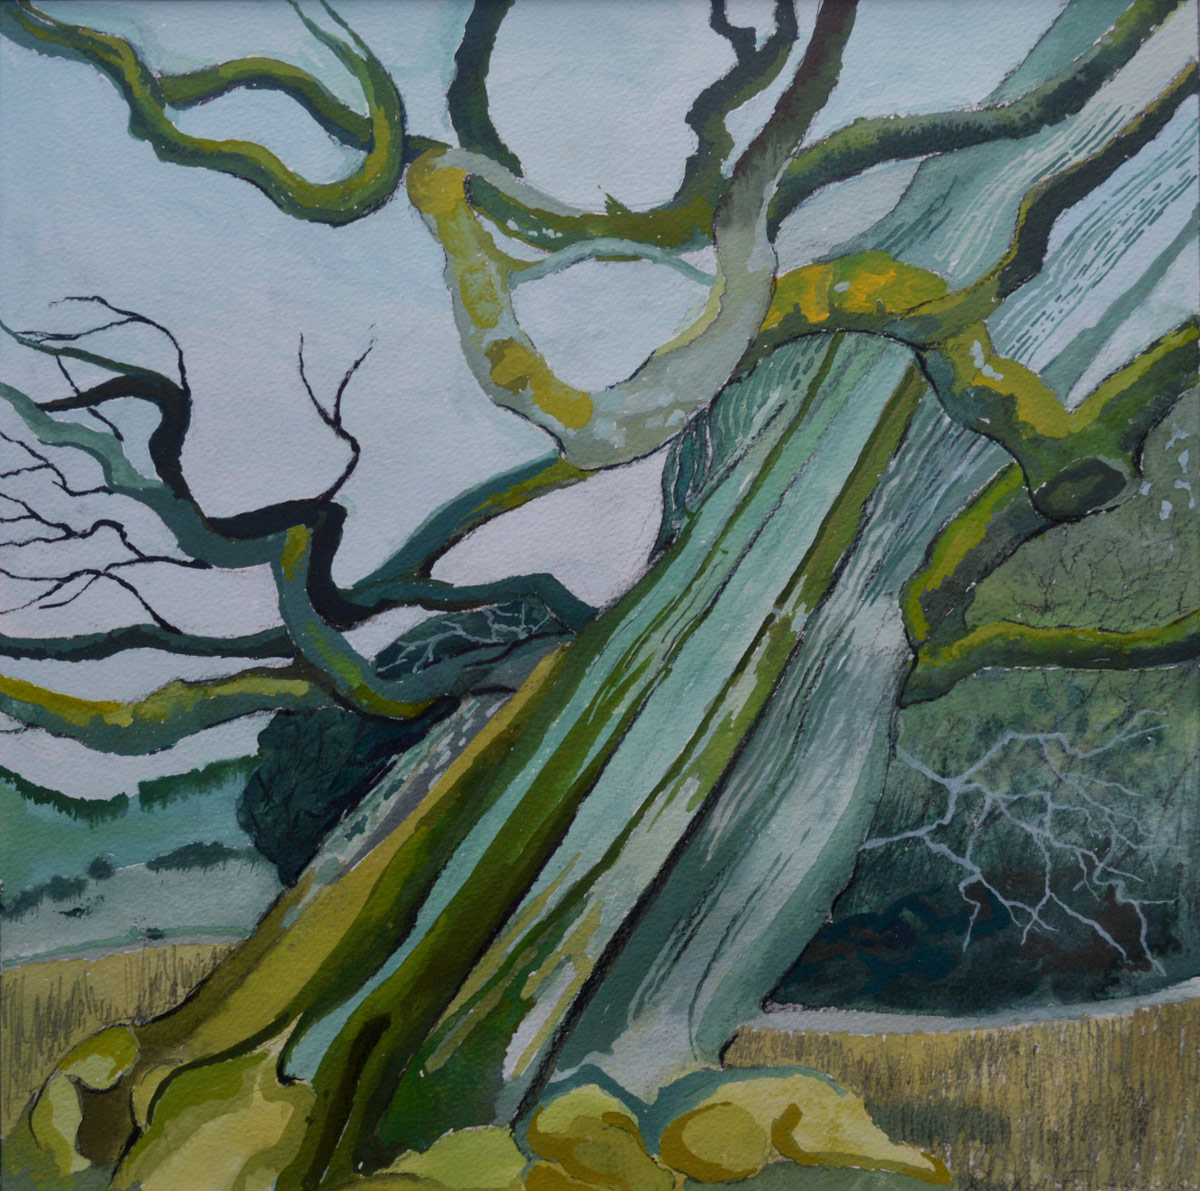 Ancient Tree gouache on paper 36 x 36 cm £900